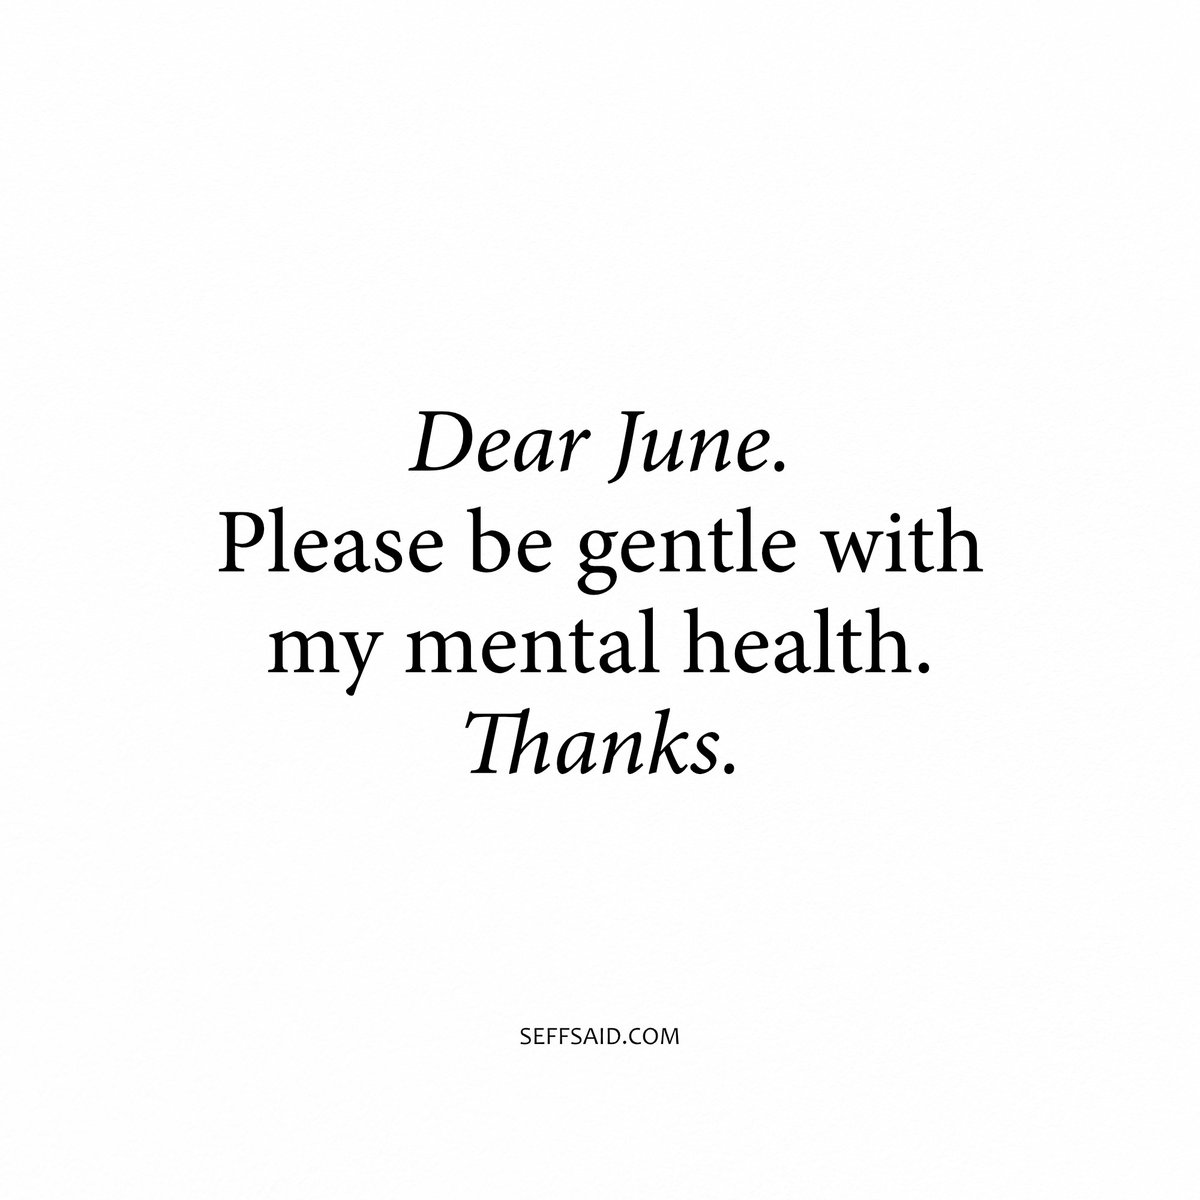 Dear June